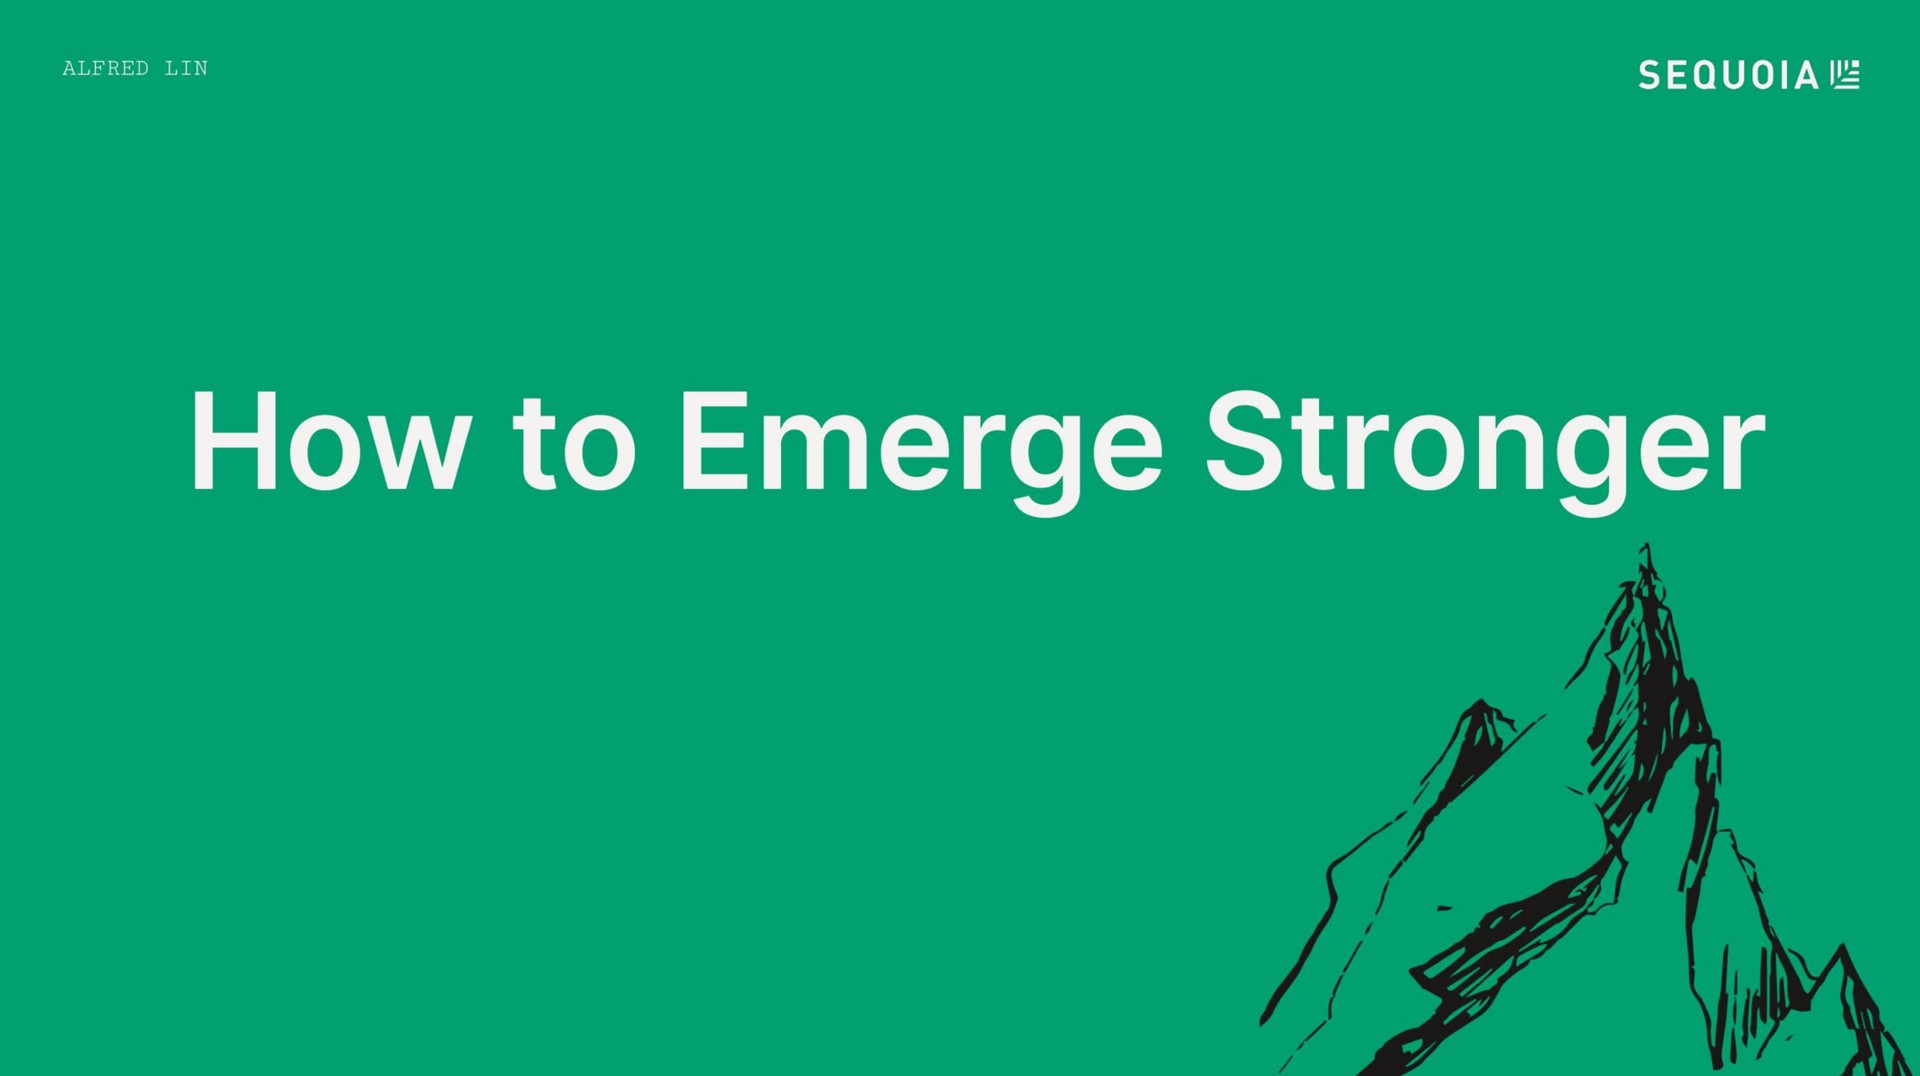 how to emerge | Sequoia Capital